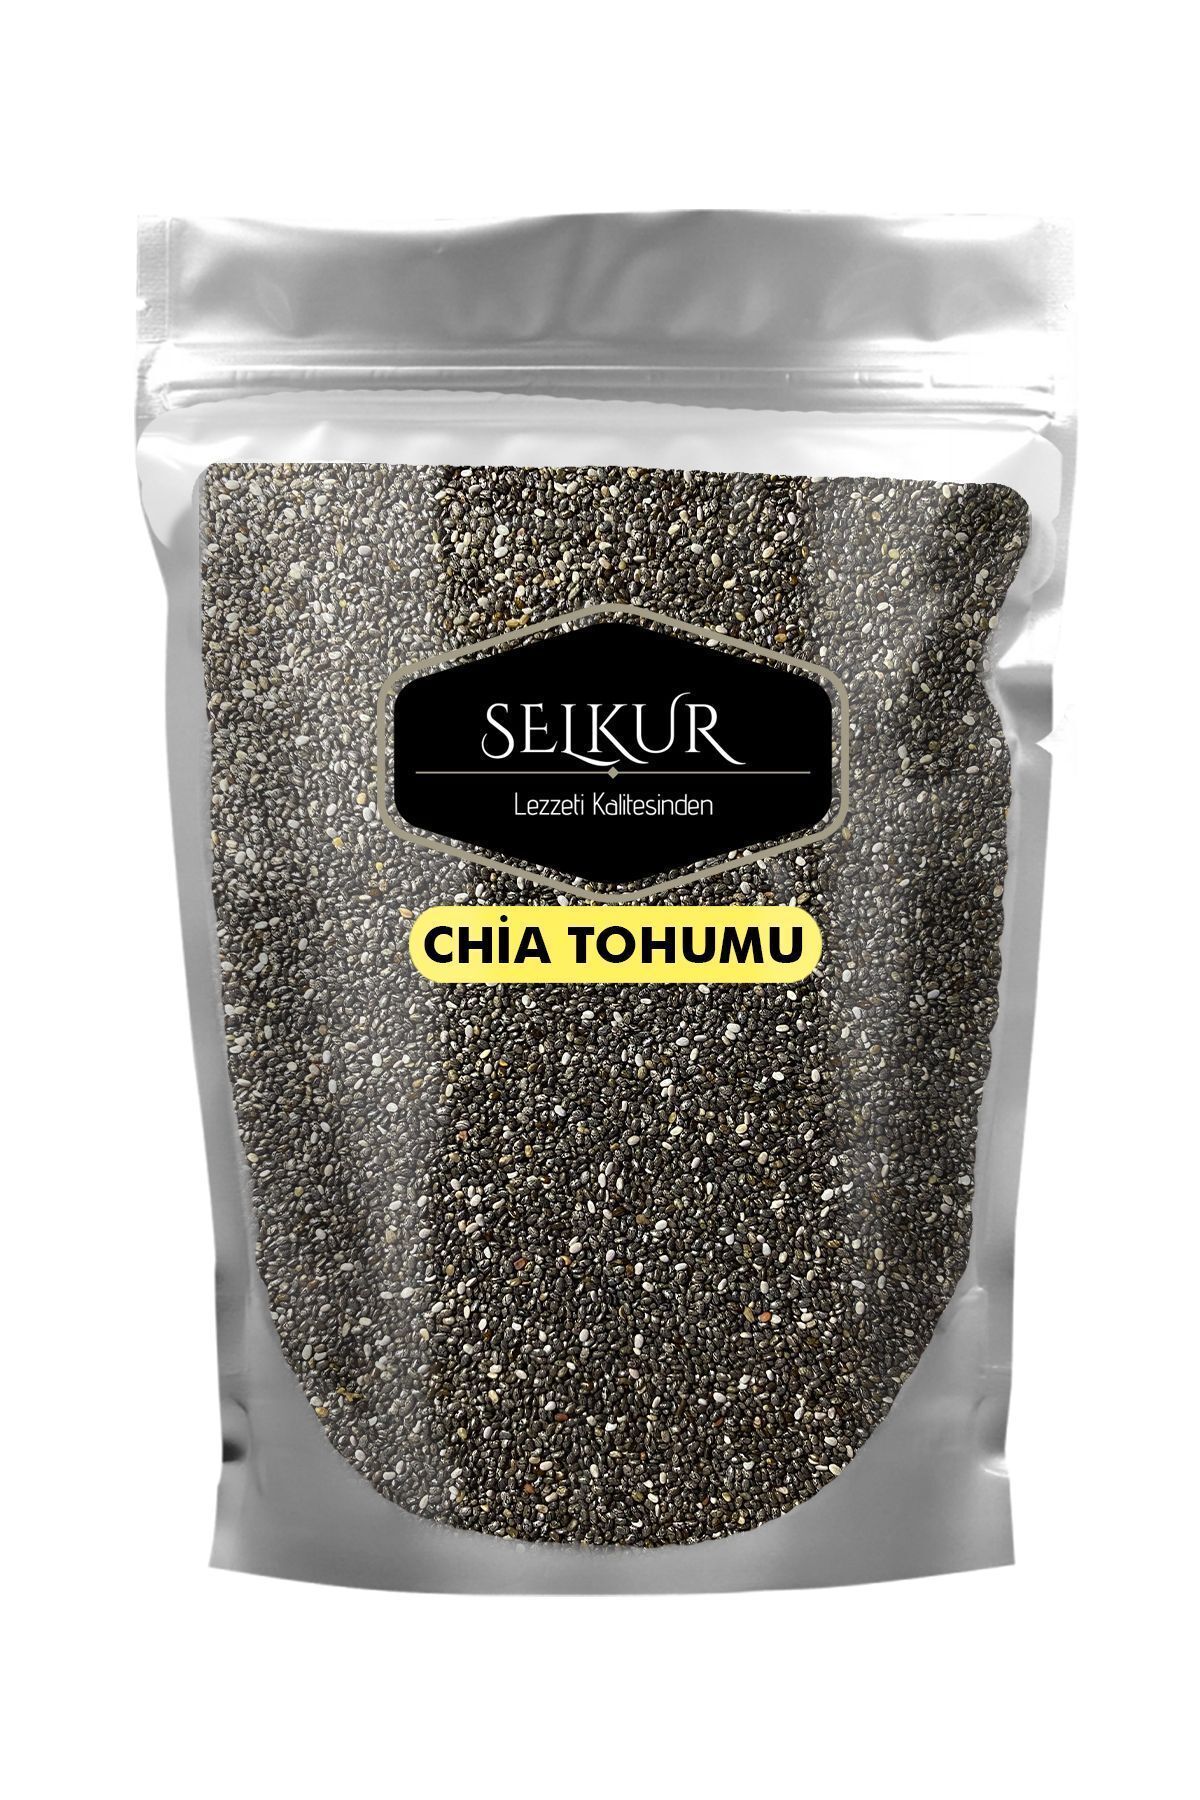 SELKUR Chia Tohumu 500gr Glutensiz & Organik Chia Seeds